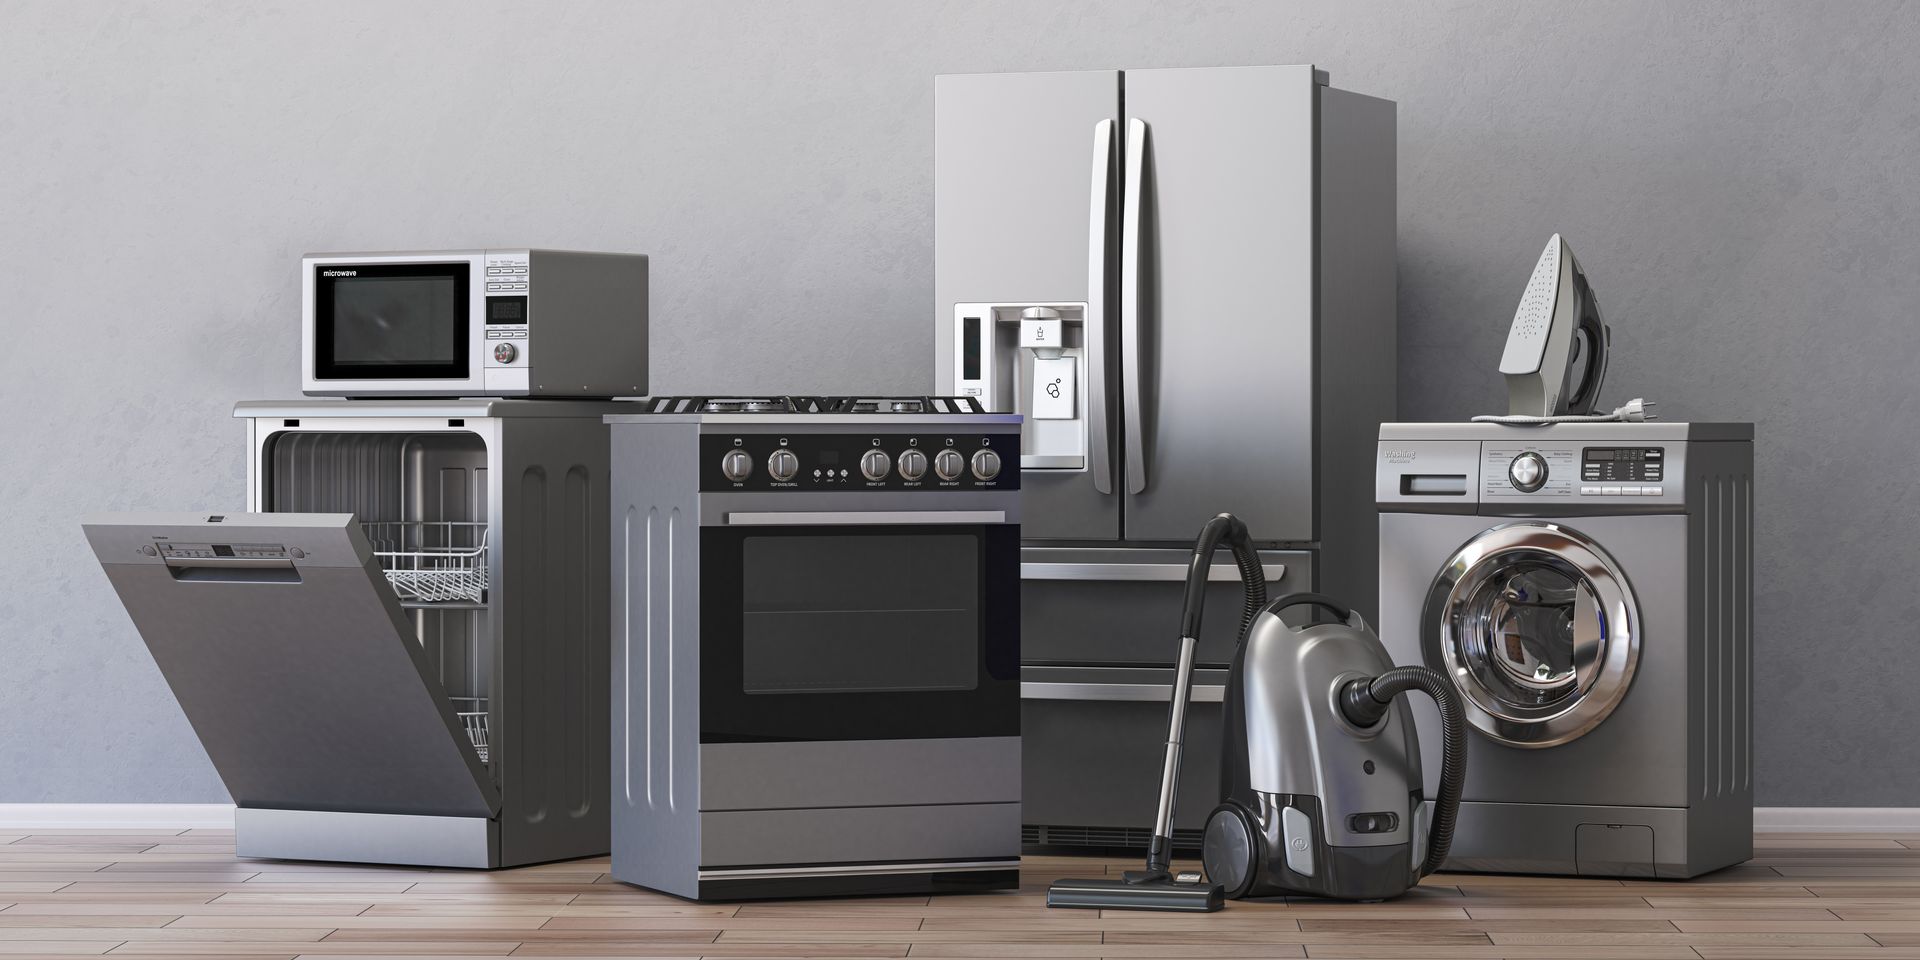 home appliances including washing machine, fridge, microwave, and dishwasher